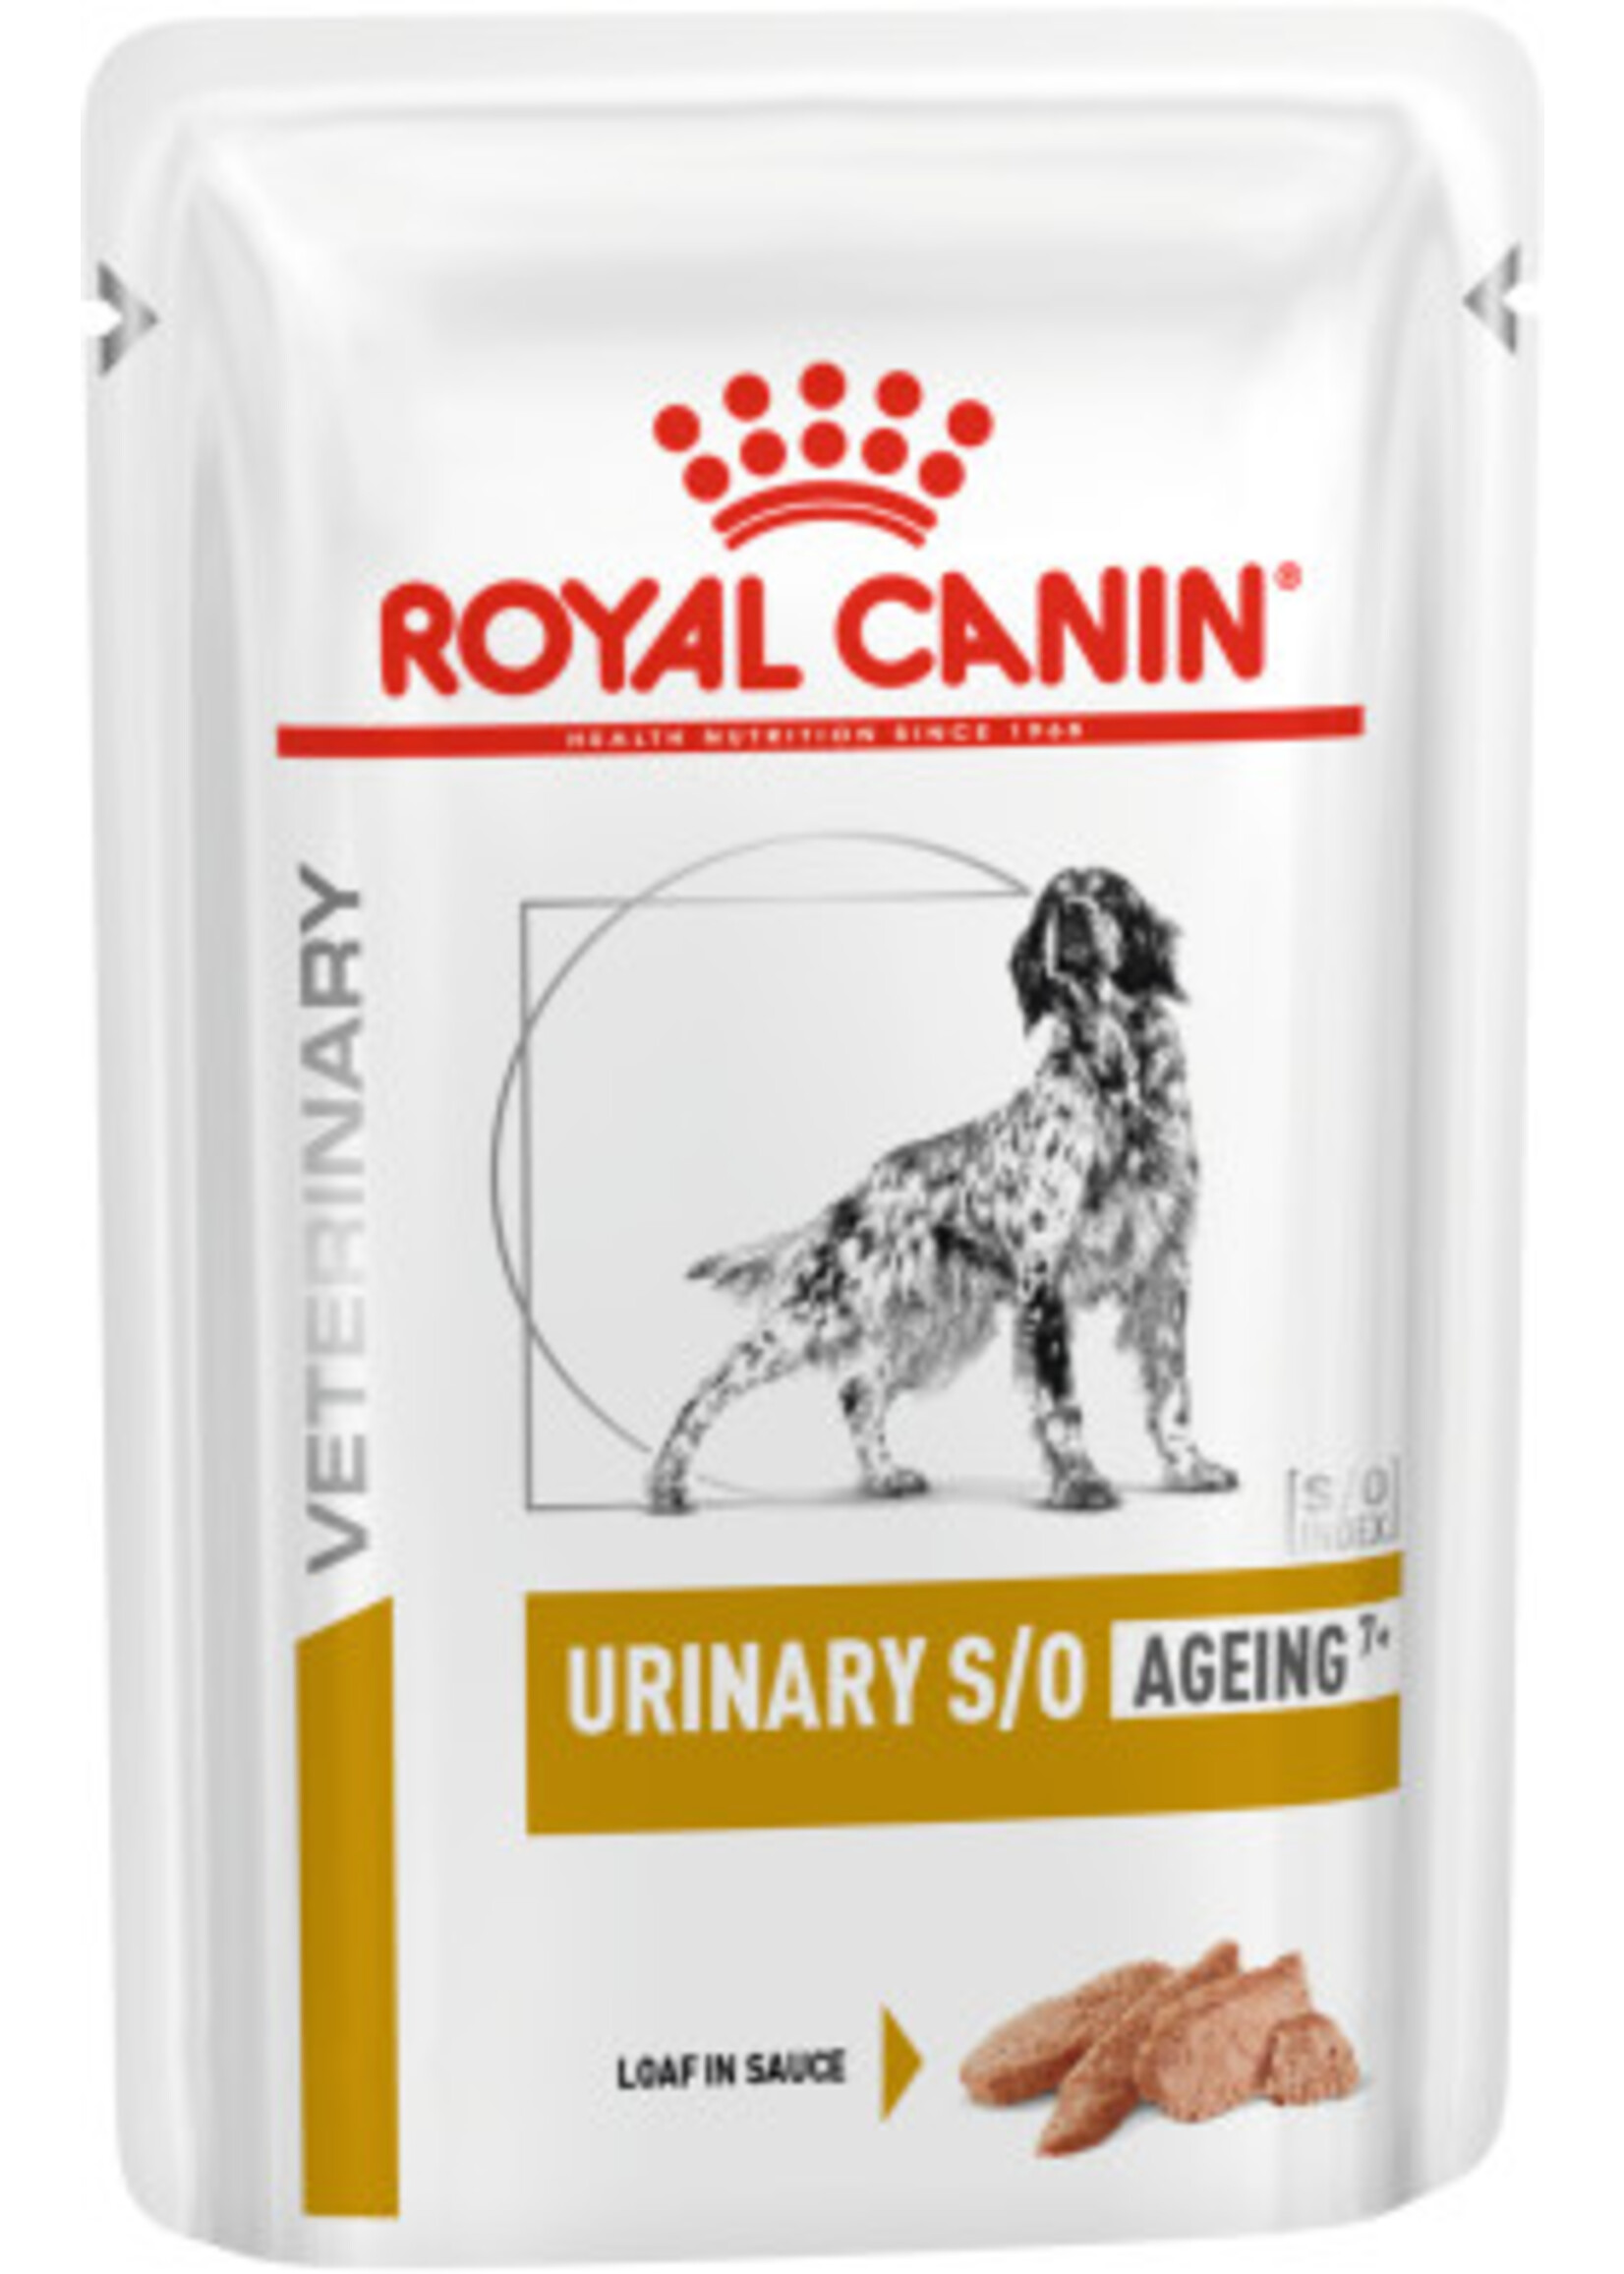 Royal Canin Royal Canin Wet Urinary S/o Ageing Hund 12x85g